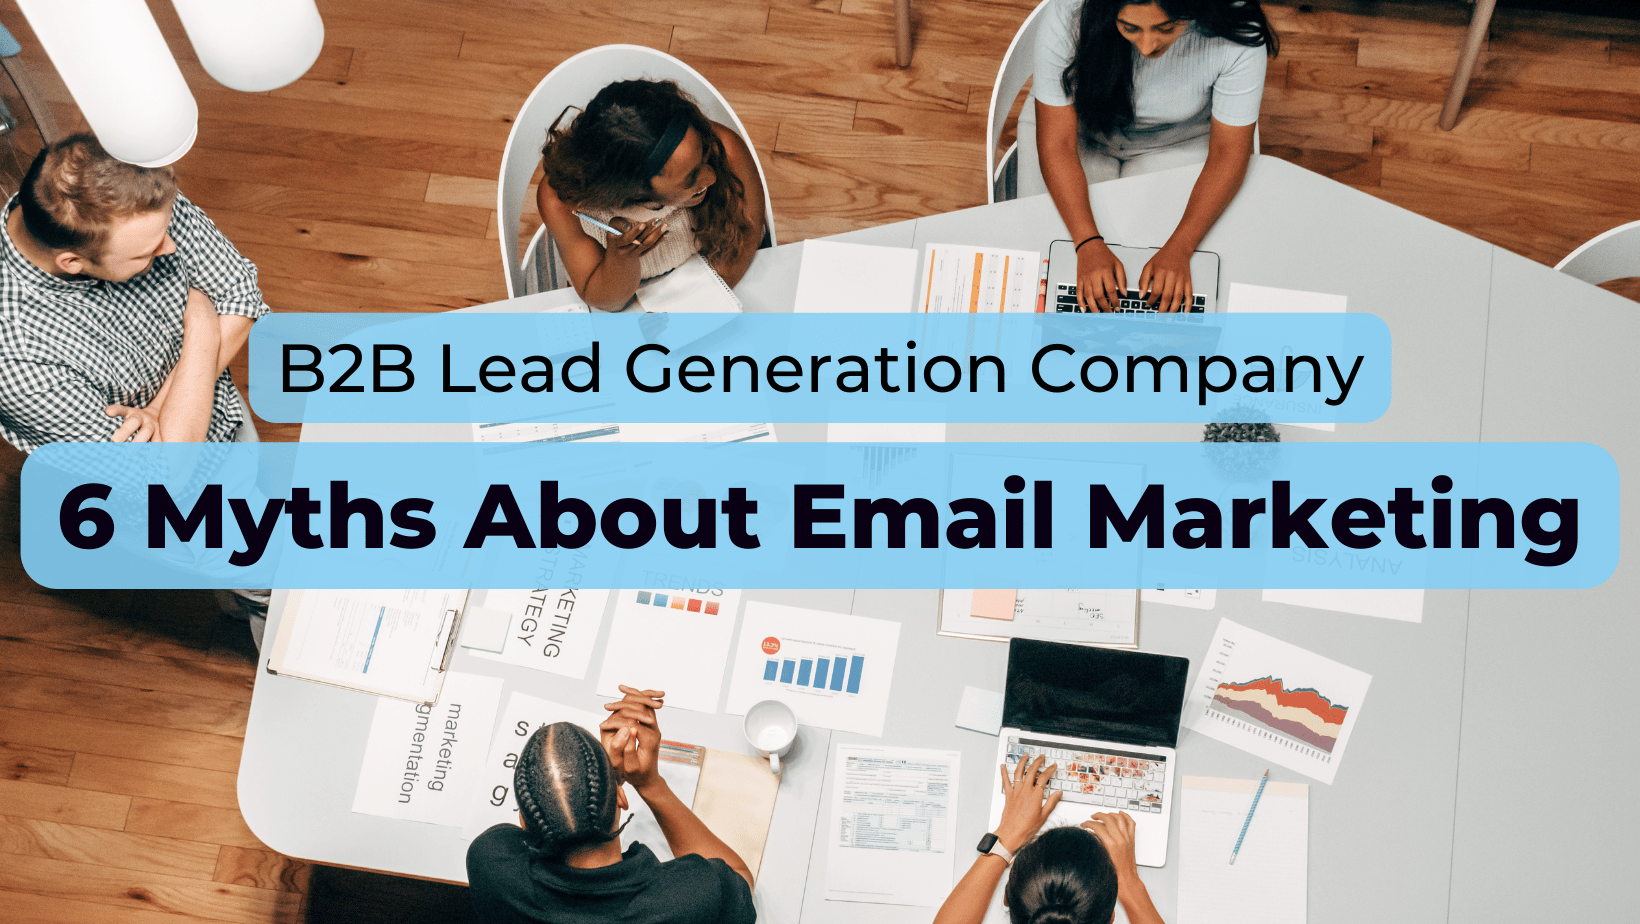 B2B Lead Generation Company: 6 Myths About Email Marketing